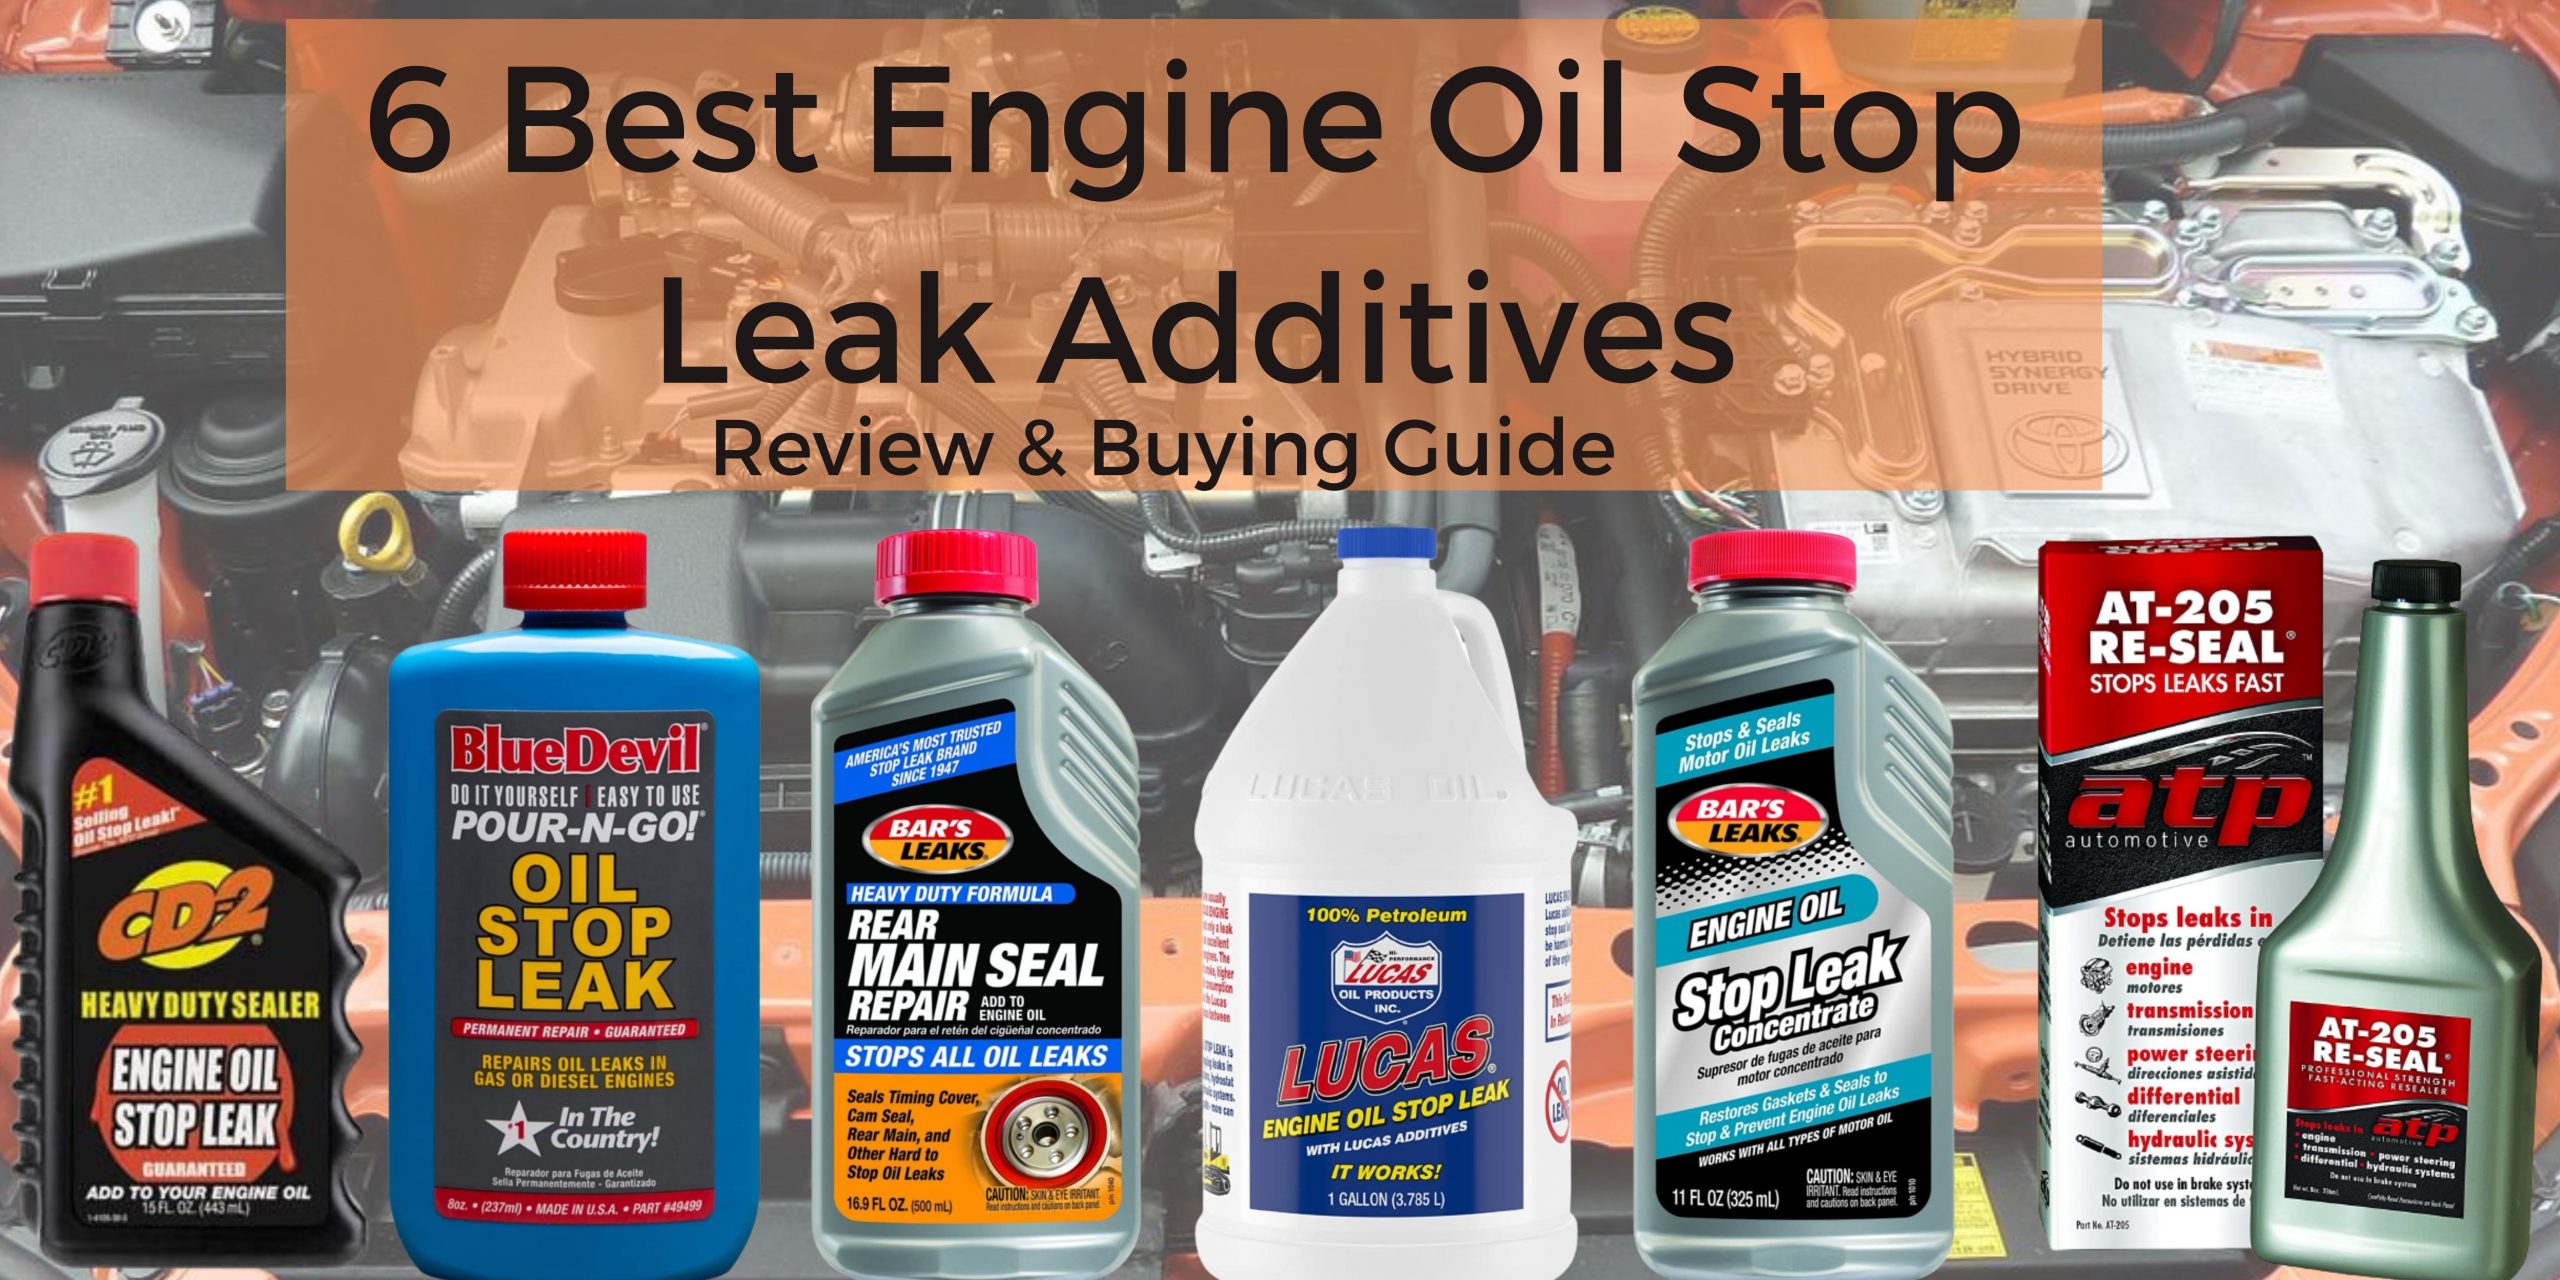 Best Engine Oil Stop Leak Additives